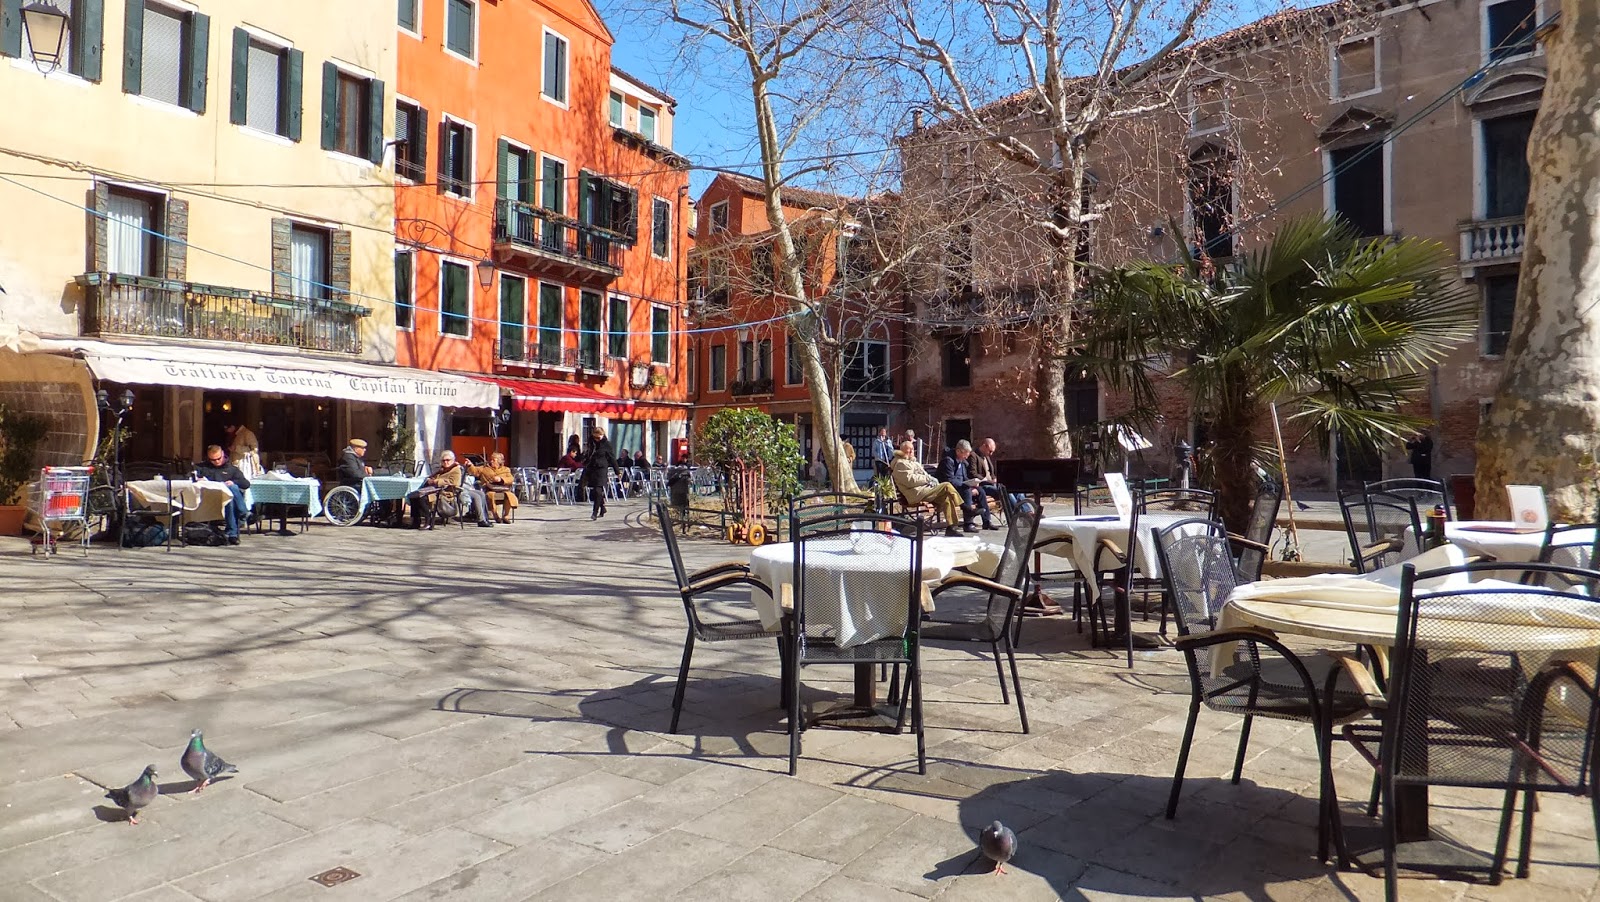 Calles de Venecia, Venezia, Italia, Elisa N, Blog de Viajes, Lifestyle, Travel, Plazas